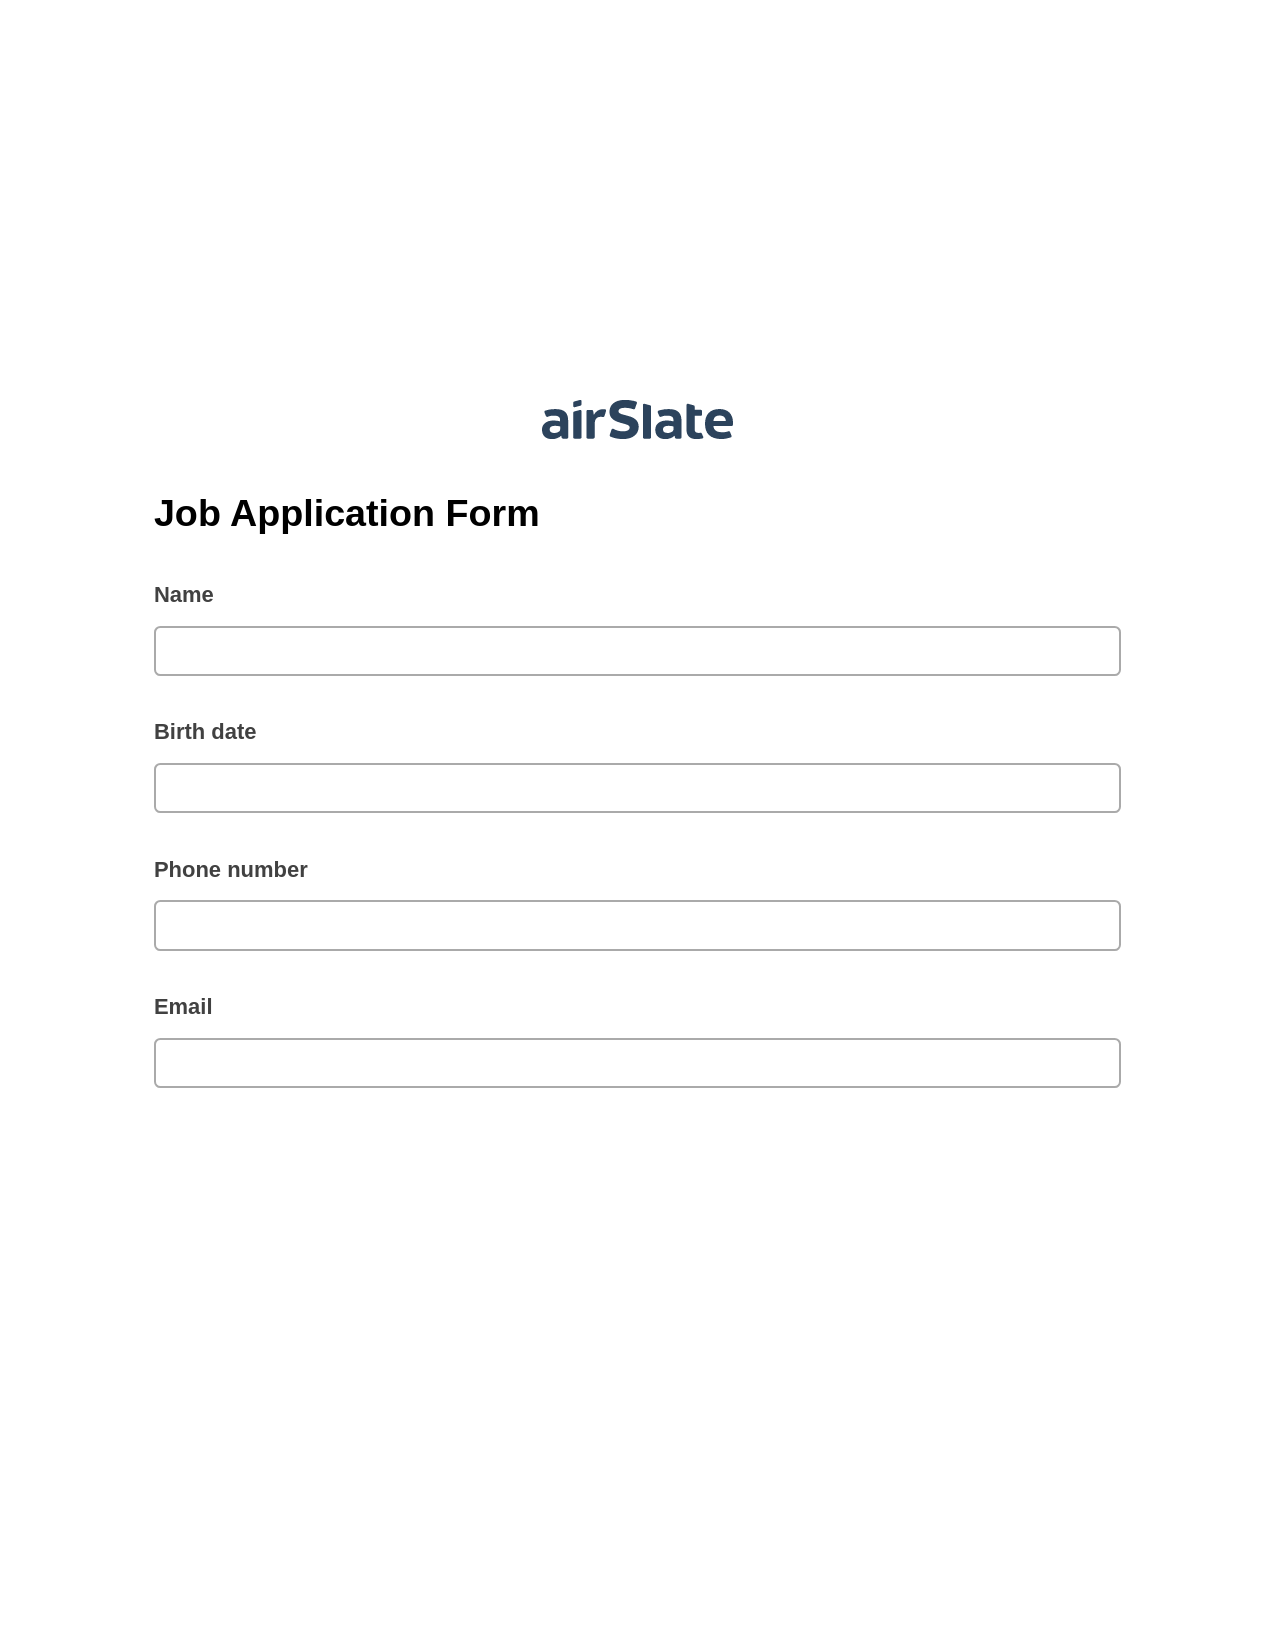 Multirole Job Application Form Pre-fill from Google Sheet Dropdown Options Bot, Lock the slate bot, Webhook Postfinish Bot